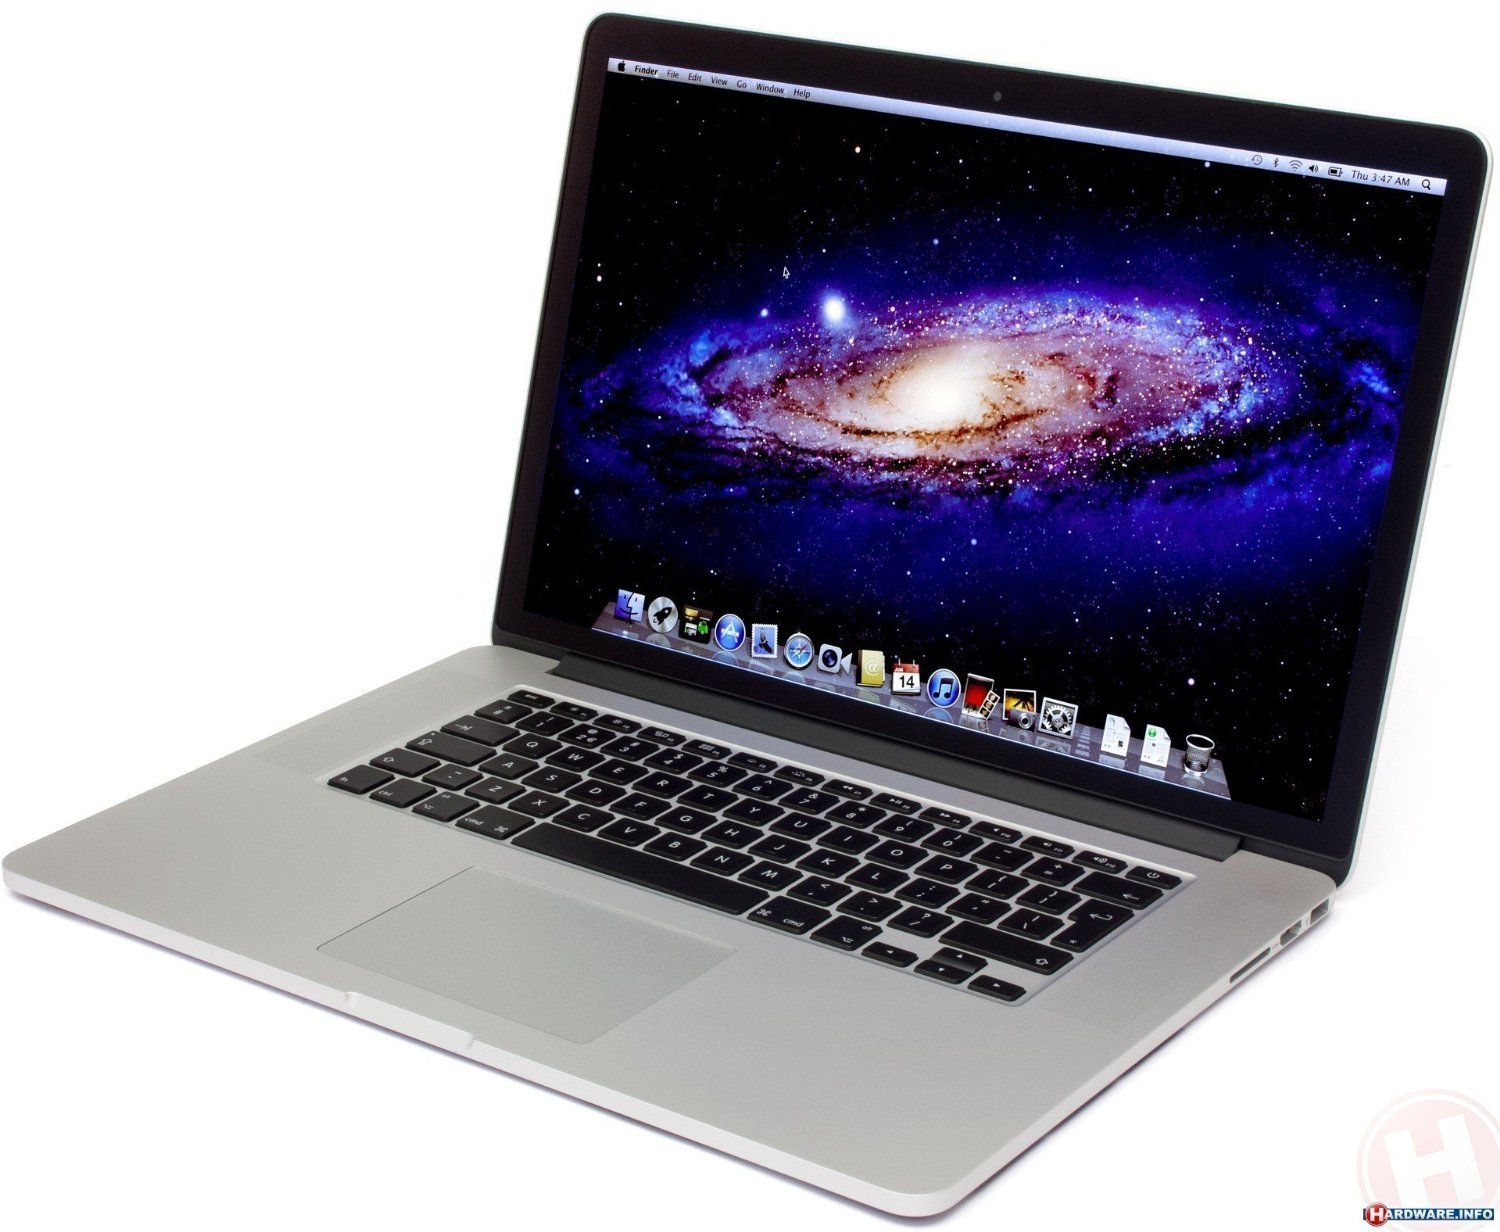 Apple MacBook Pro 15.4-Inch Laptop Intel Quad-Core i7 2.3GHz, 1 TB Hard Drive, 16GB DDR3 Memory, DVD Burner